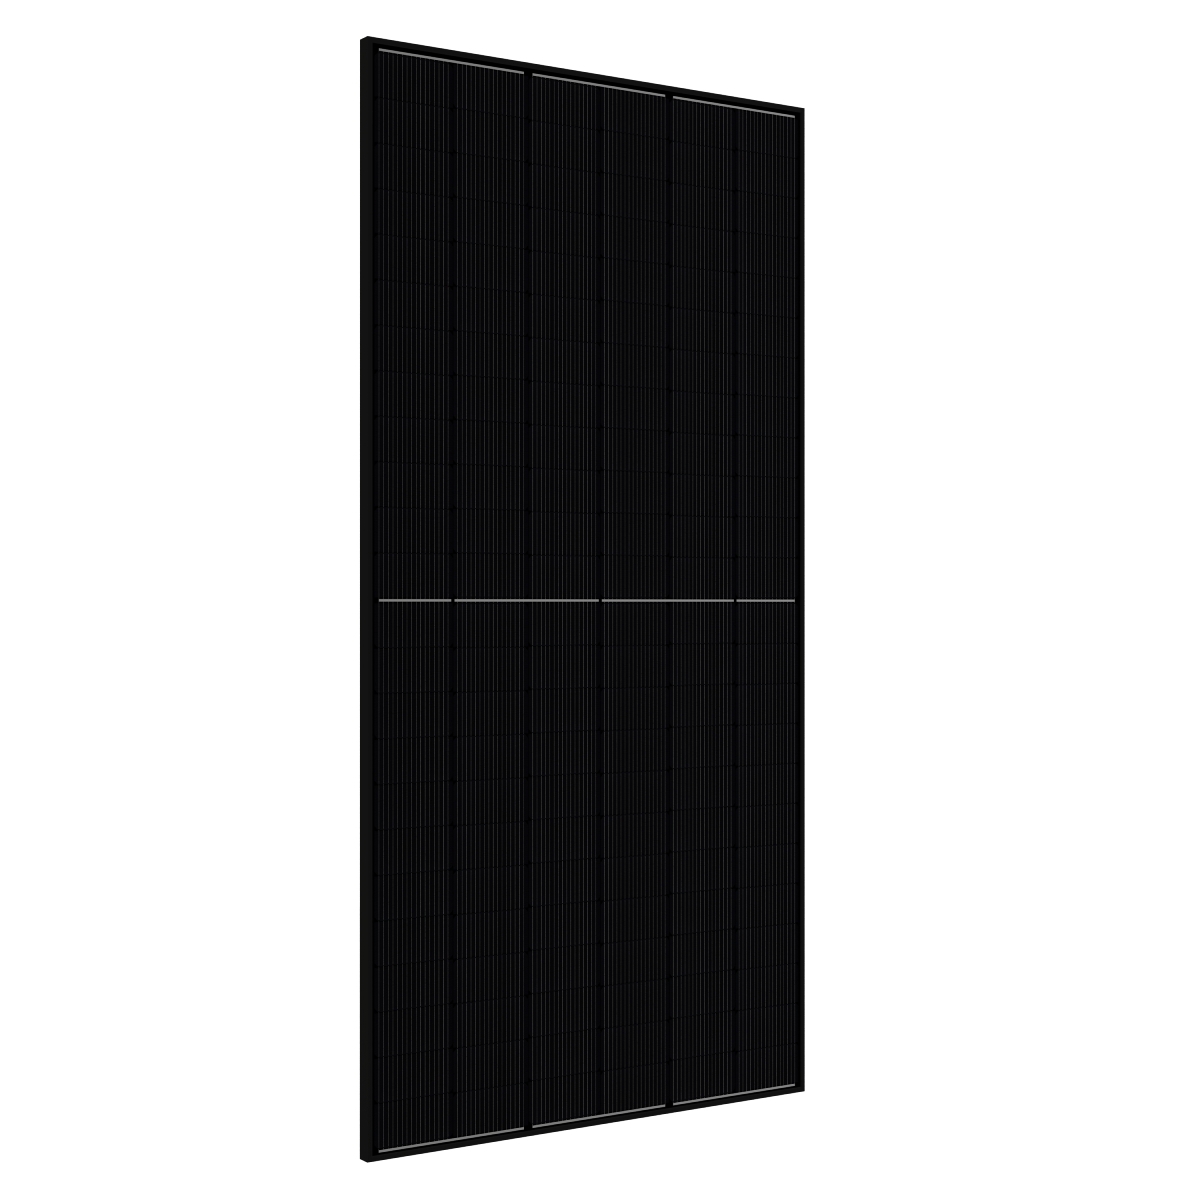 TommaTech 565Wp 144TNFB M10 TopCon Dark Series Solar Panel